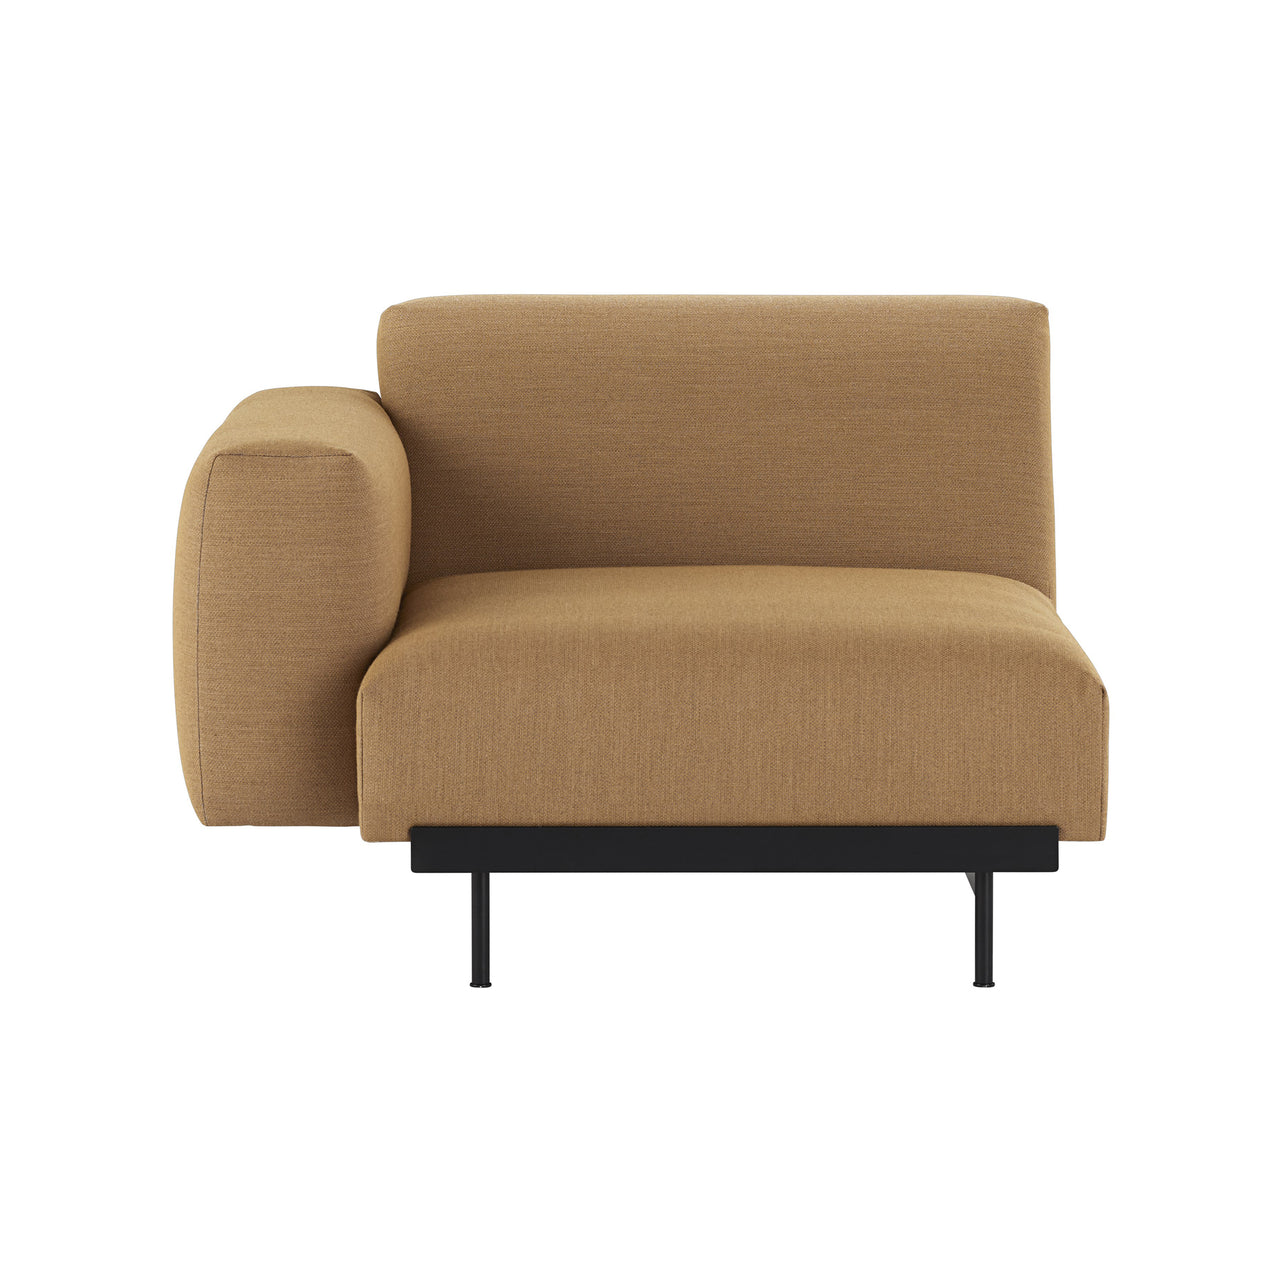 In Situ Modular Sofa: Modules + Left Armrest